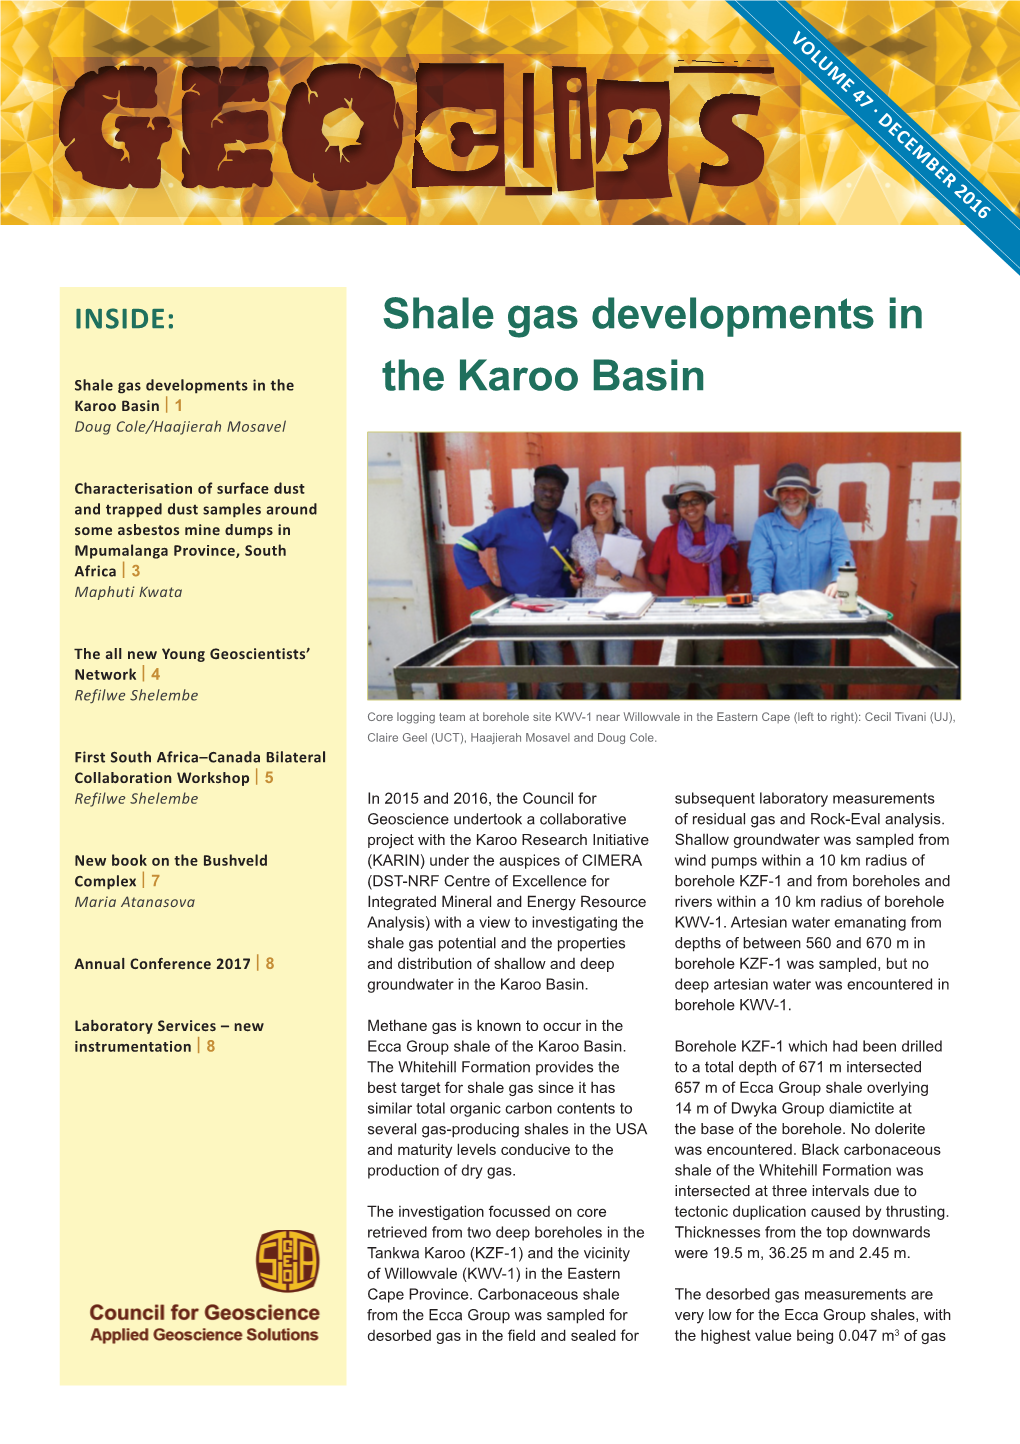 Shale Gas Developments in the Karoo Basin